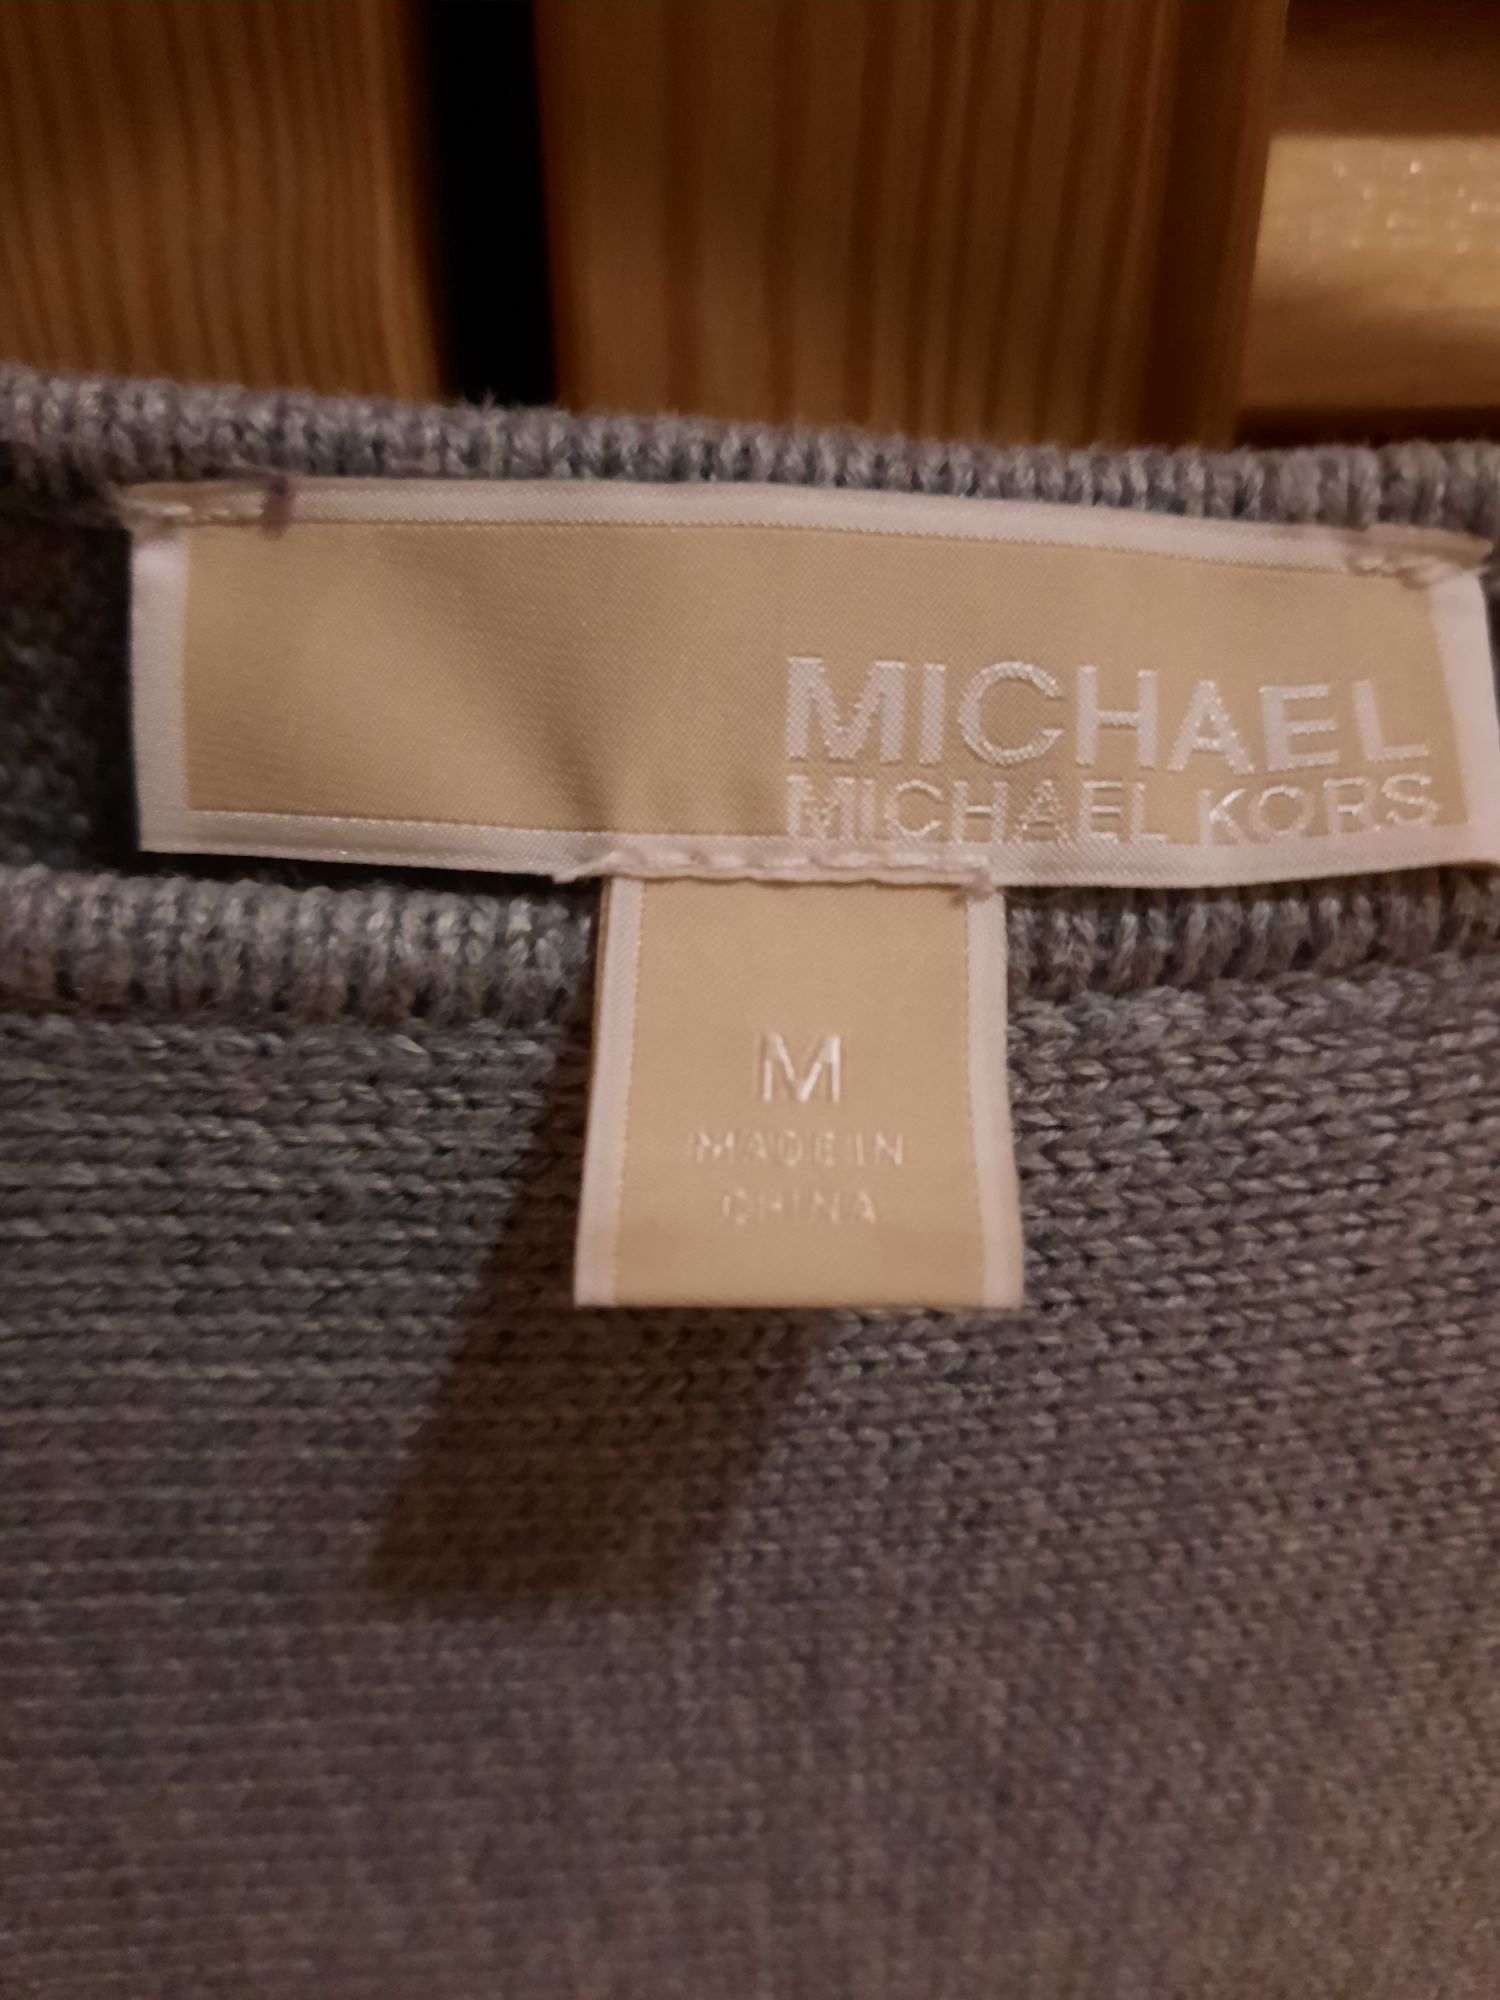 Długi sweter damski Michaela Korsa (MK)